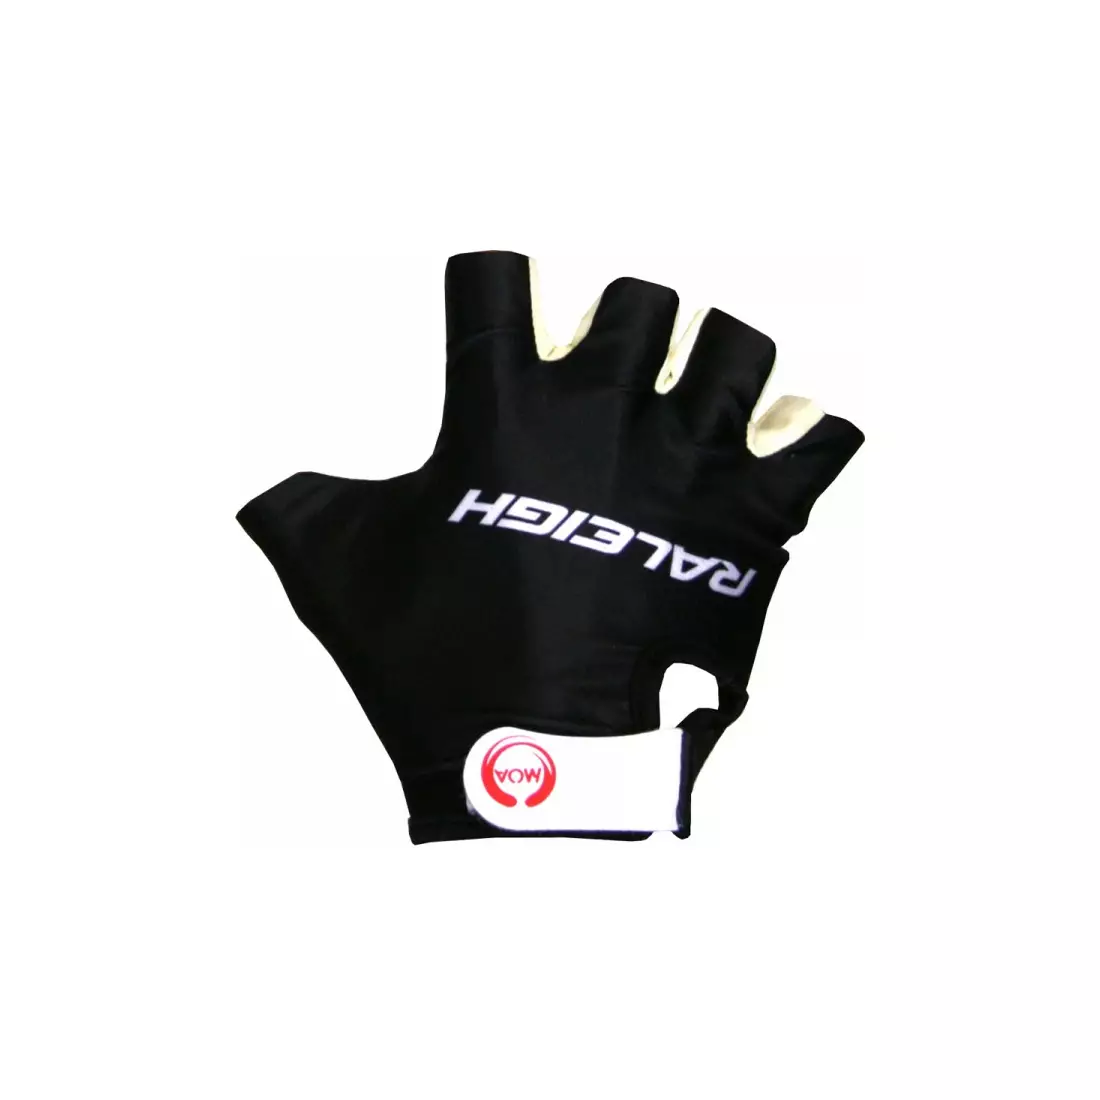 NALINI - TEAM RALEIGH 2013 - cycling gloves